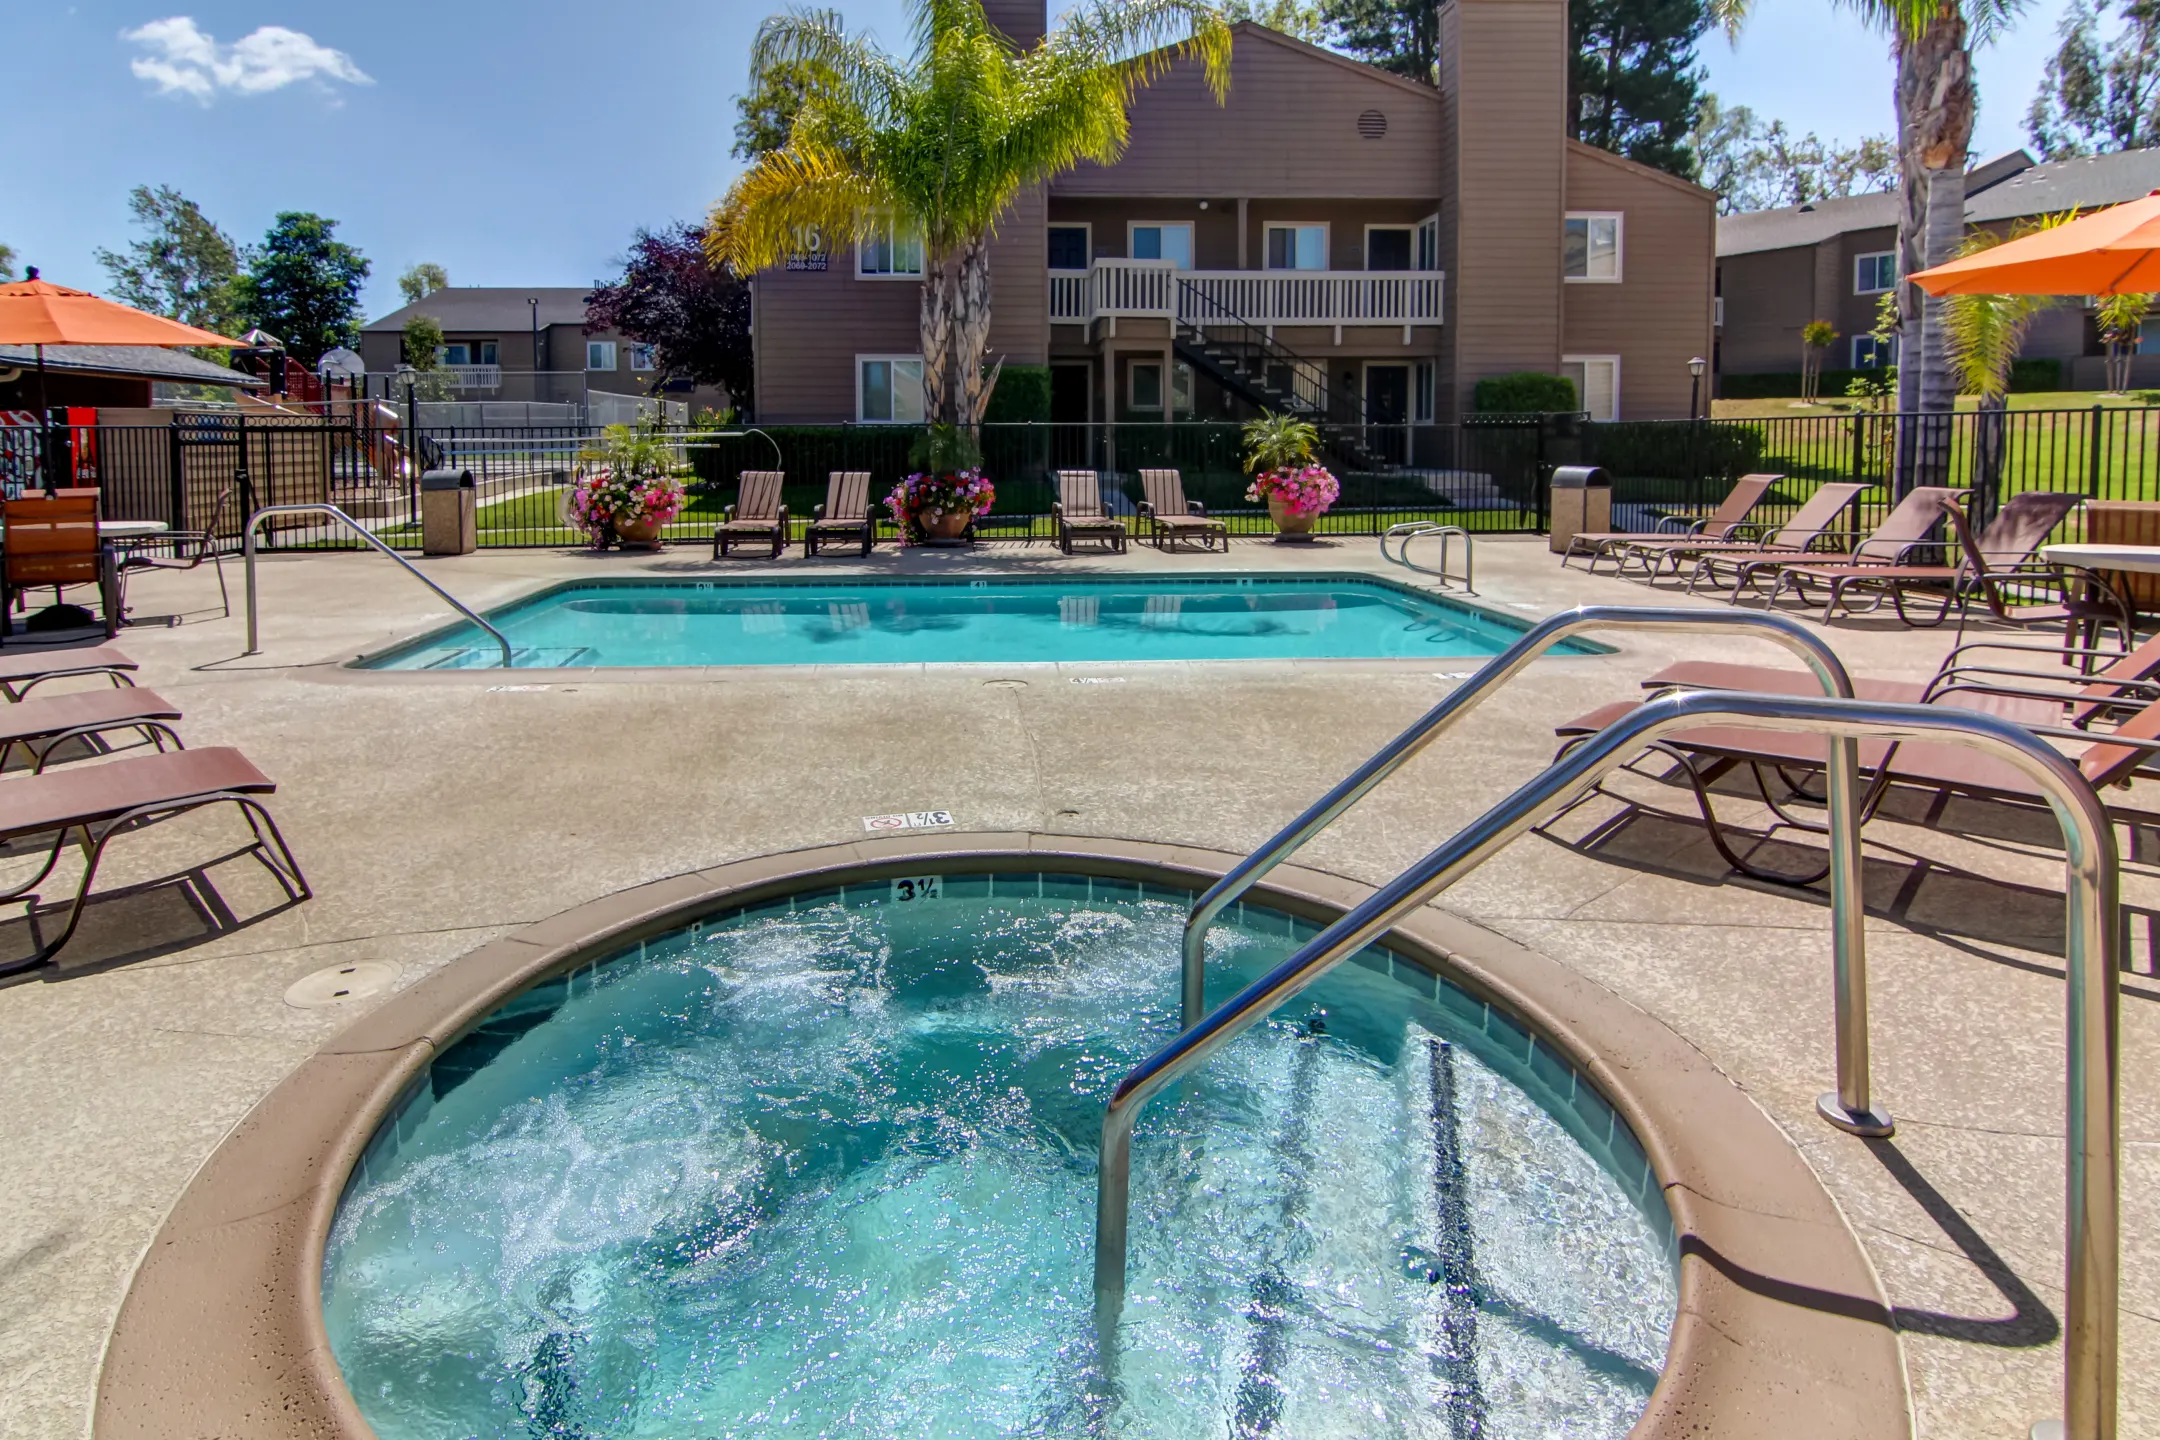 Pool - Sycamore Terrace Apartments - Temecula, CA